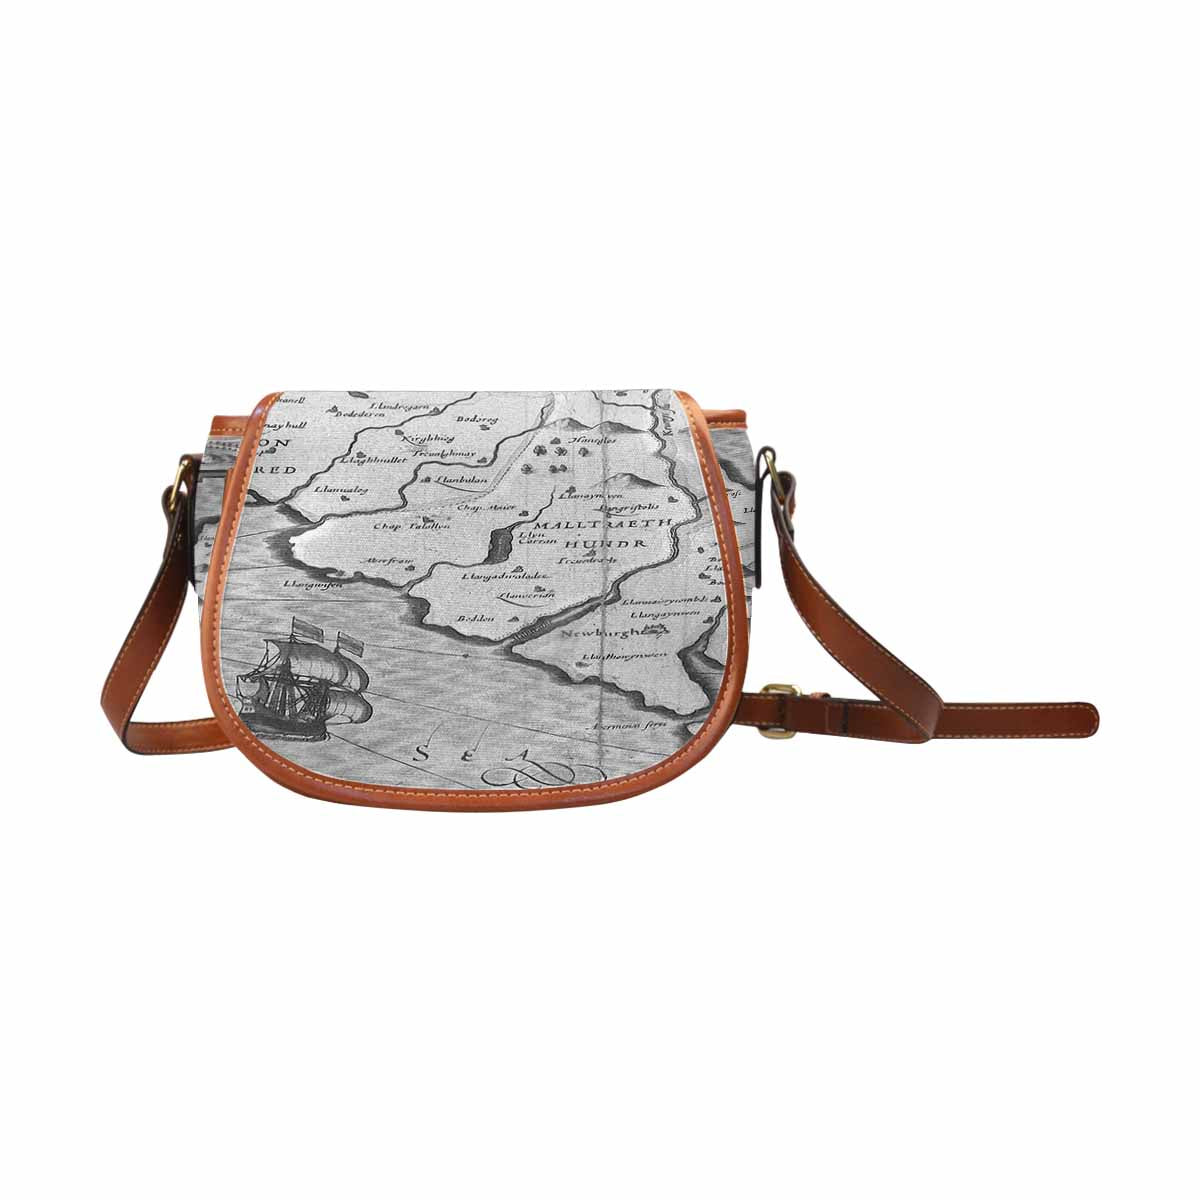 Antique Map design Handbag, saddle bag, Design 11